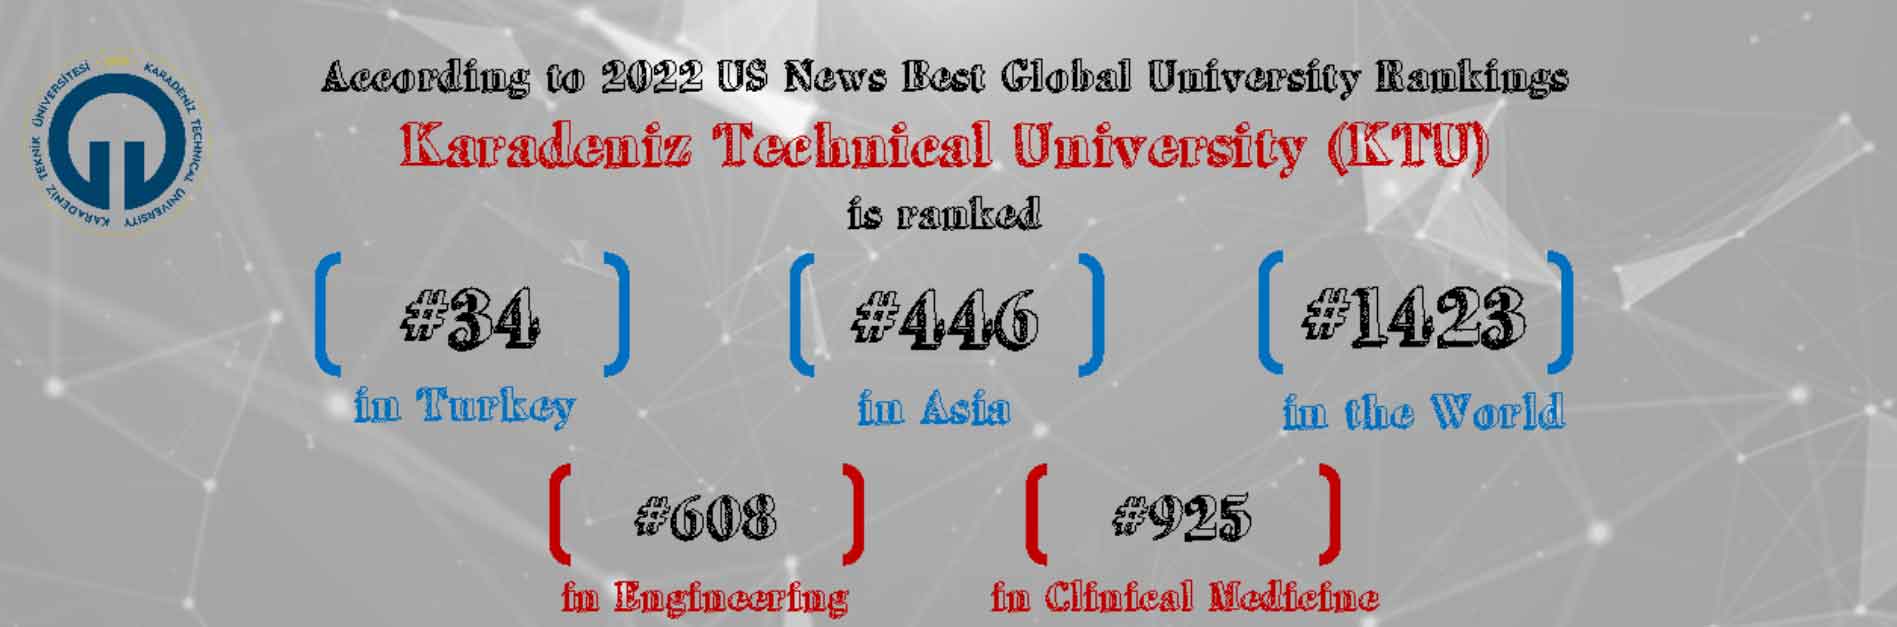 US News Global University Rankings